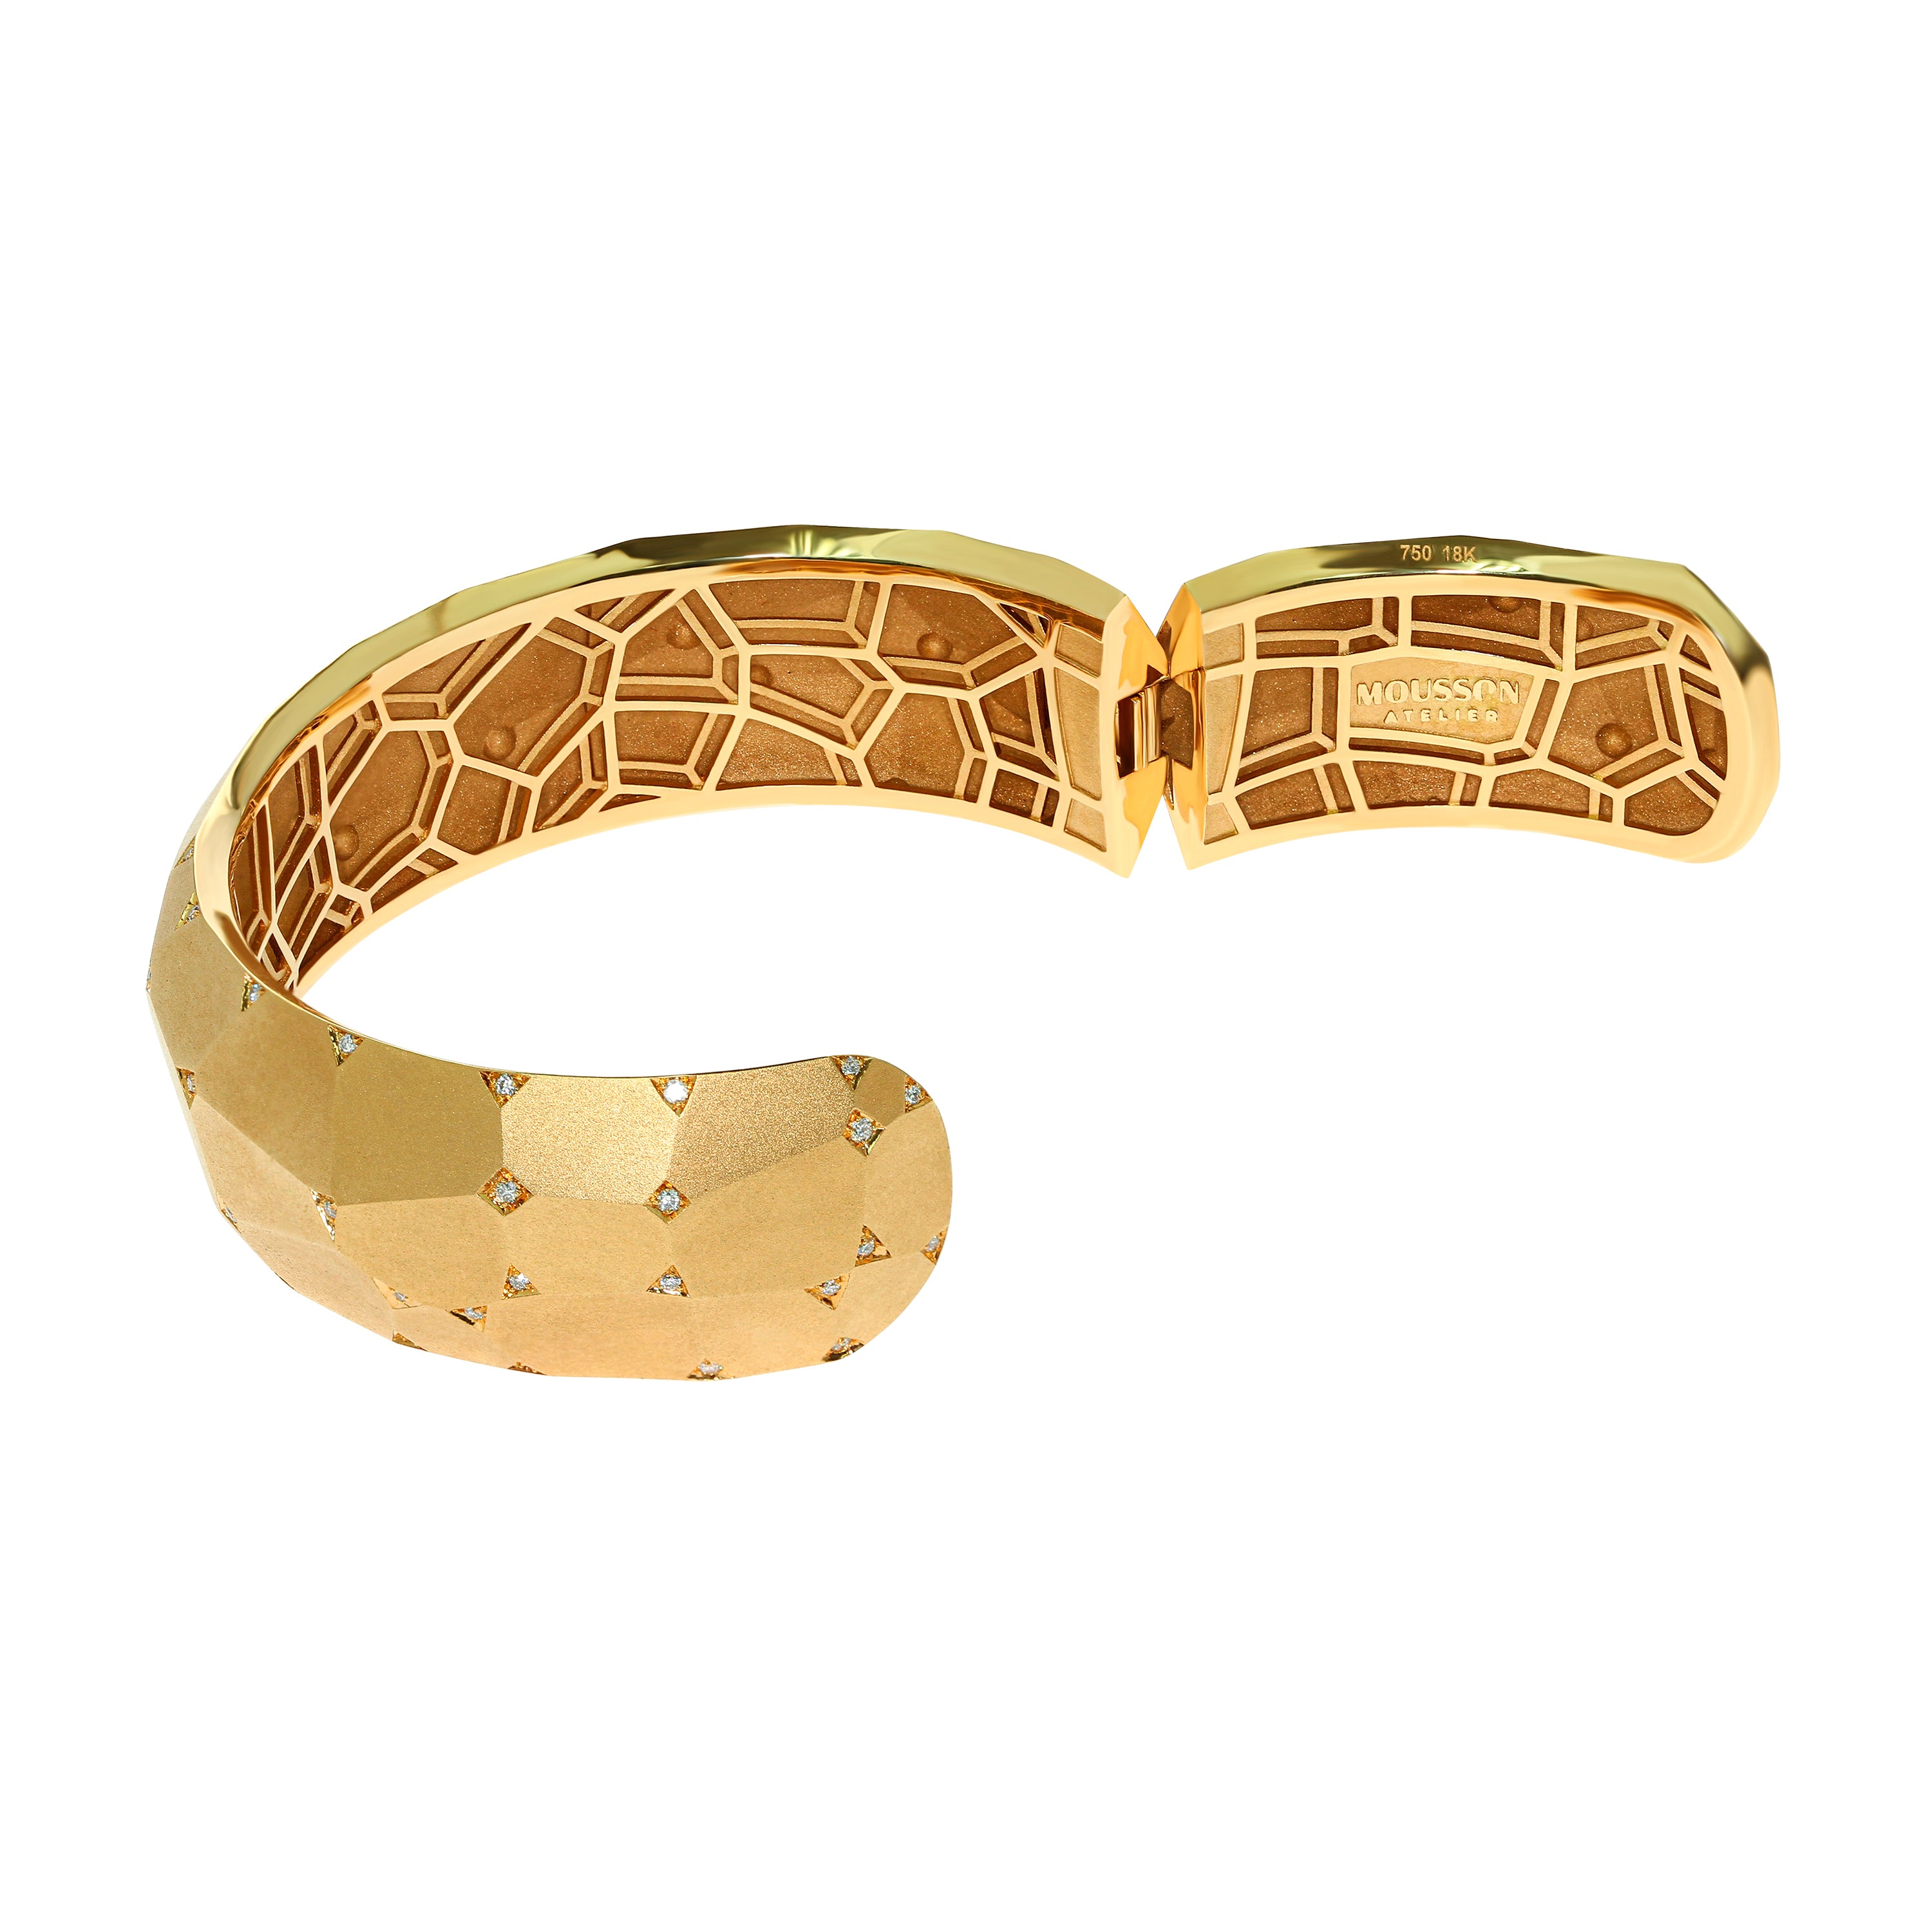 Br 0190-0, 18K Yellow Gold, Diamonds Bracelet